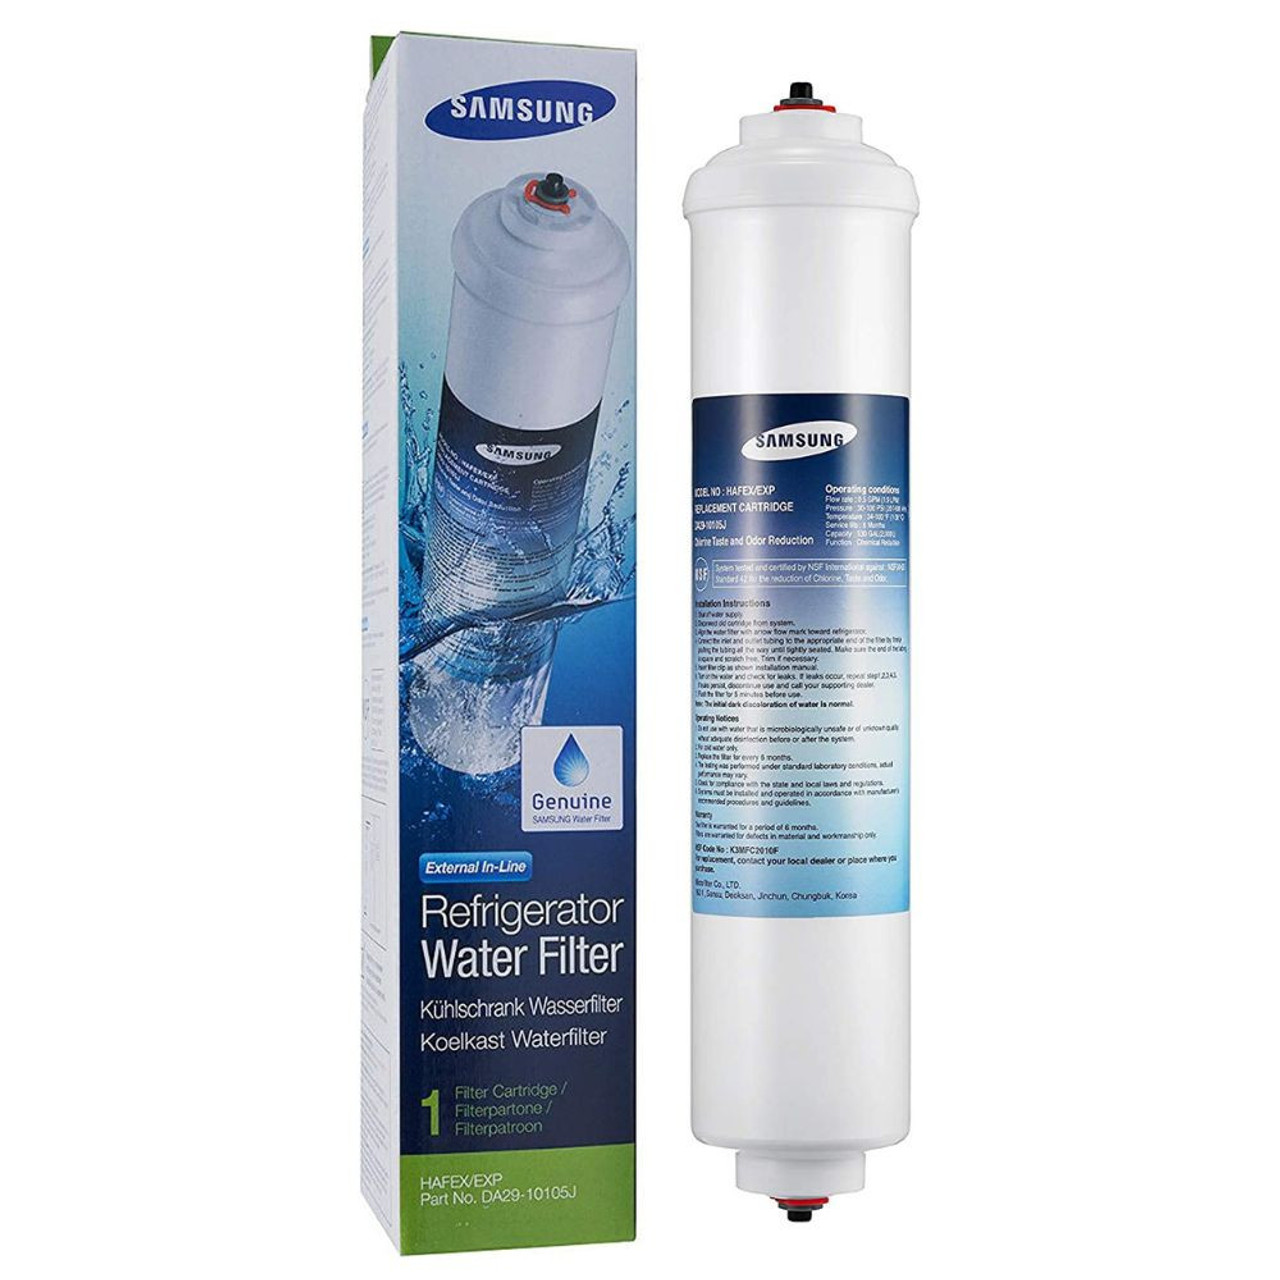 4 Pack of Samsung DA29-10105J HAFEX/EXP Fridge Water Filter Genuine